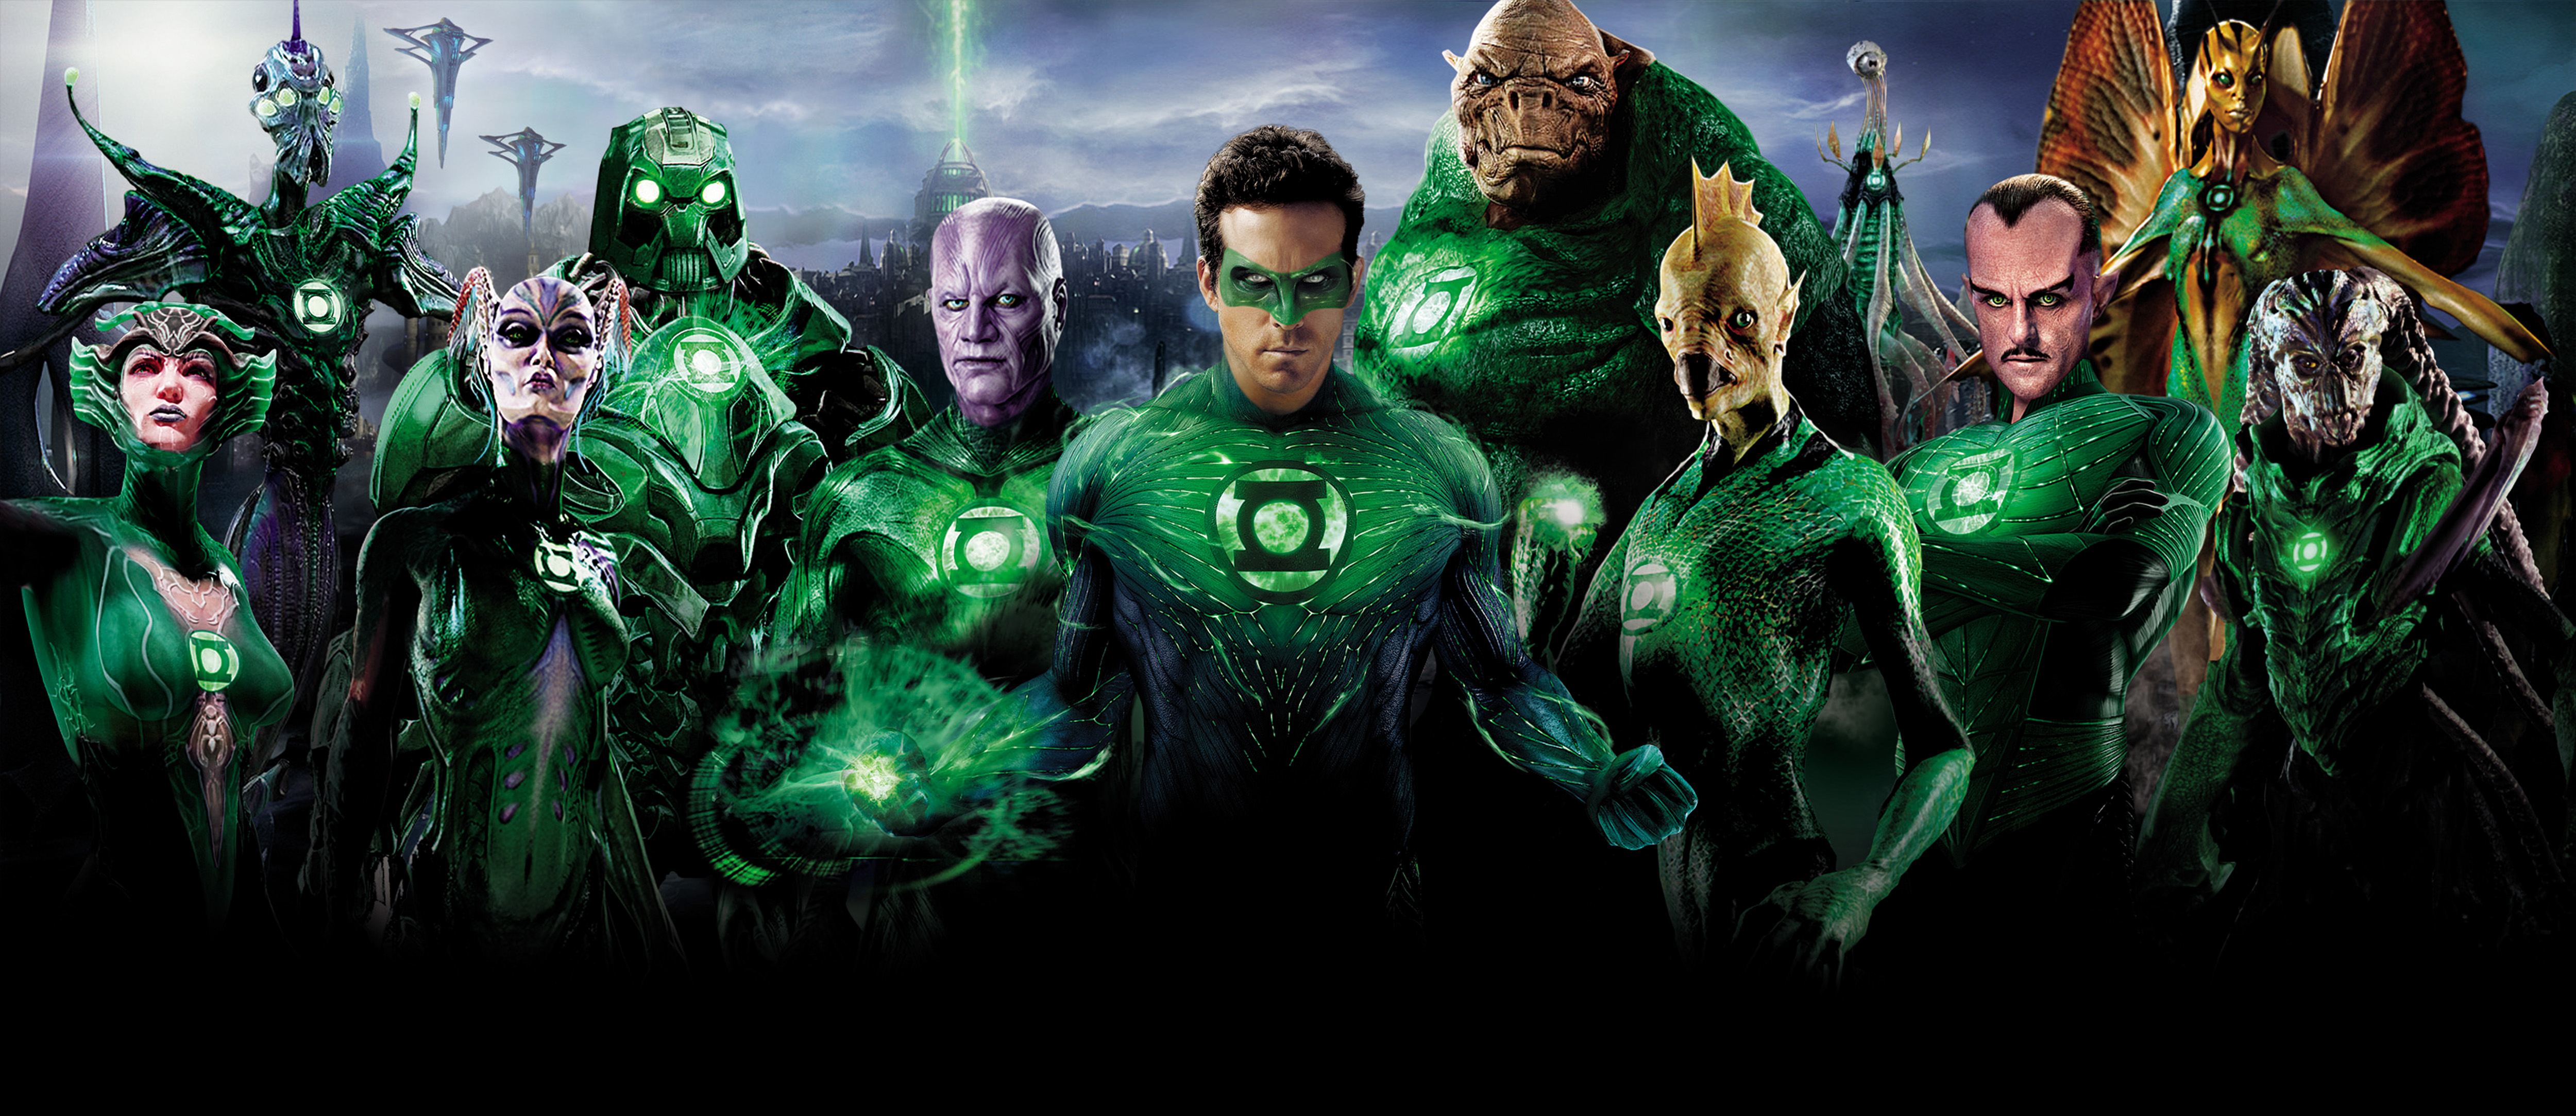 Movie Green Lantern 4k Ultra HD Wallpaper